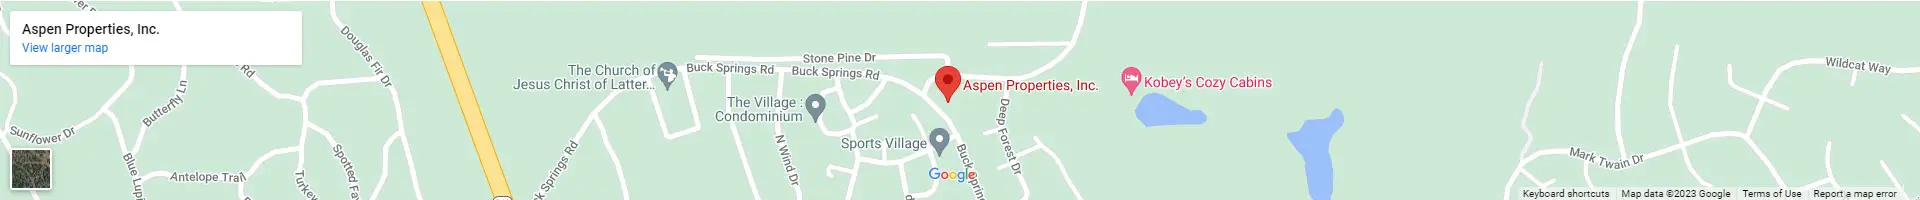 A map of aspen properties in the city of aspen.